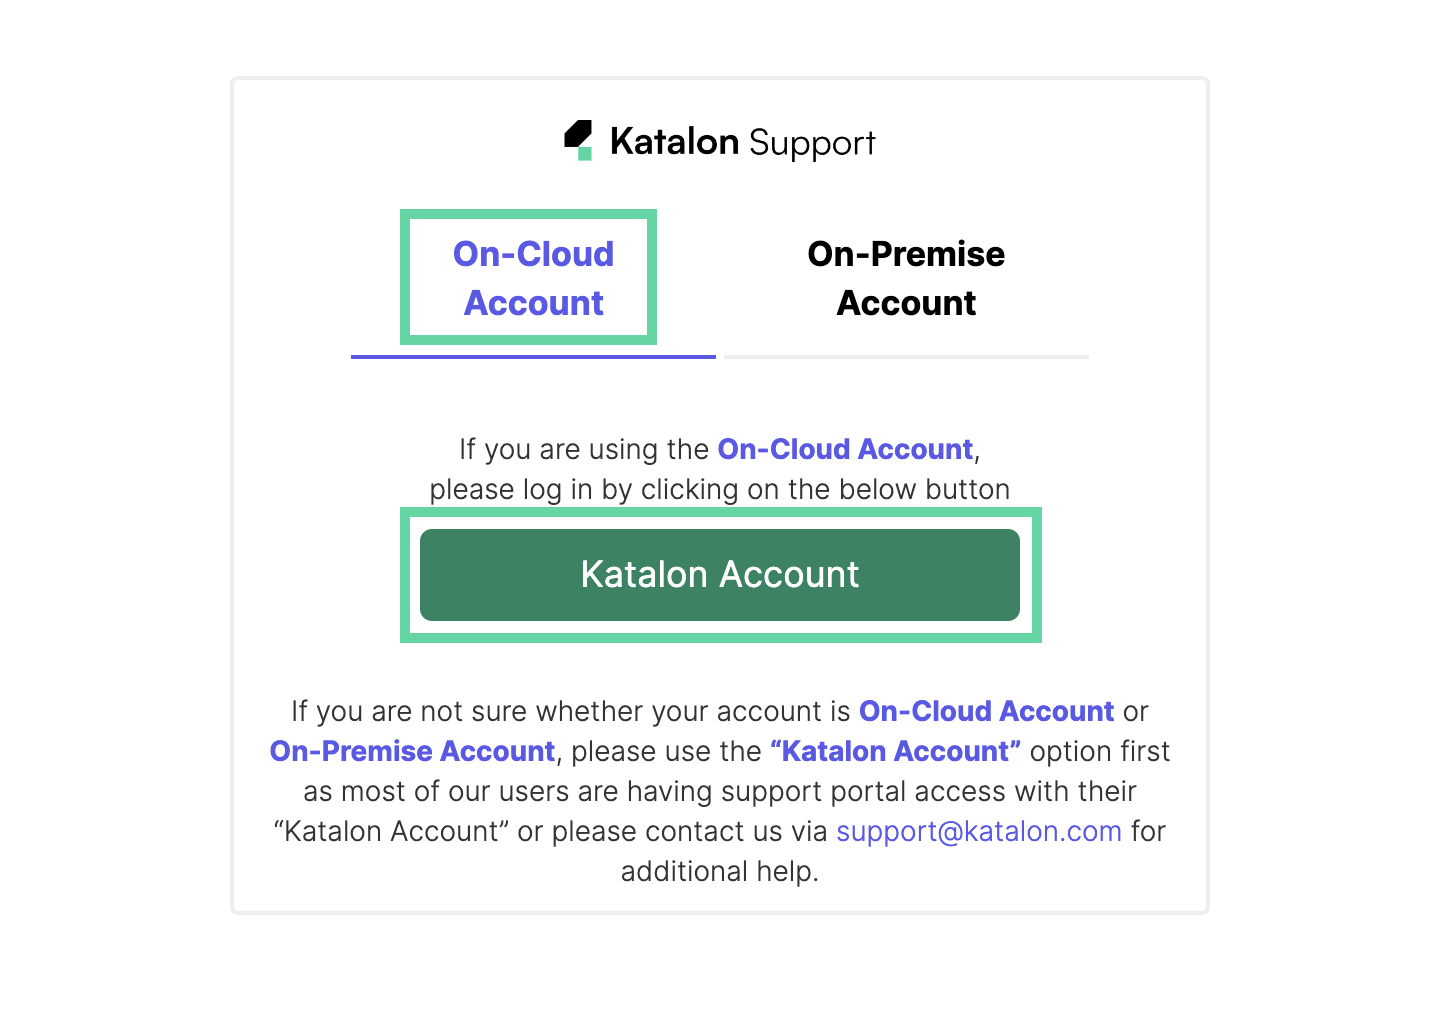 Katalon Support Portal - Katalon Account button